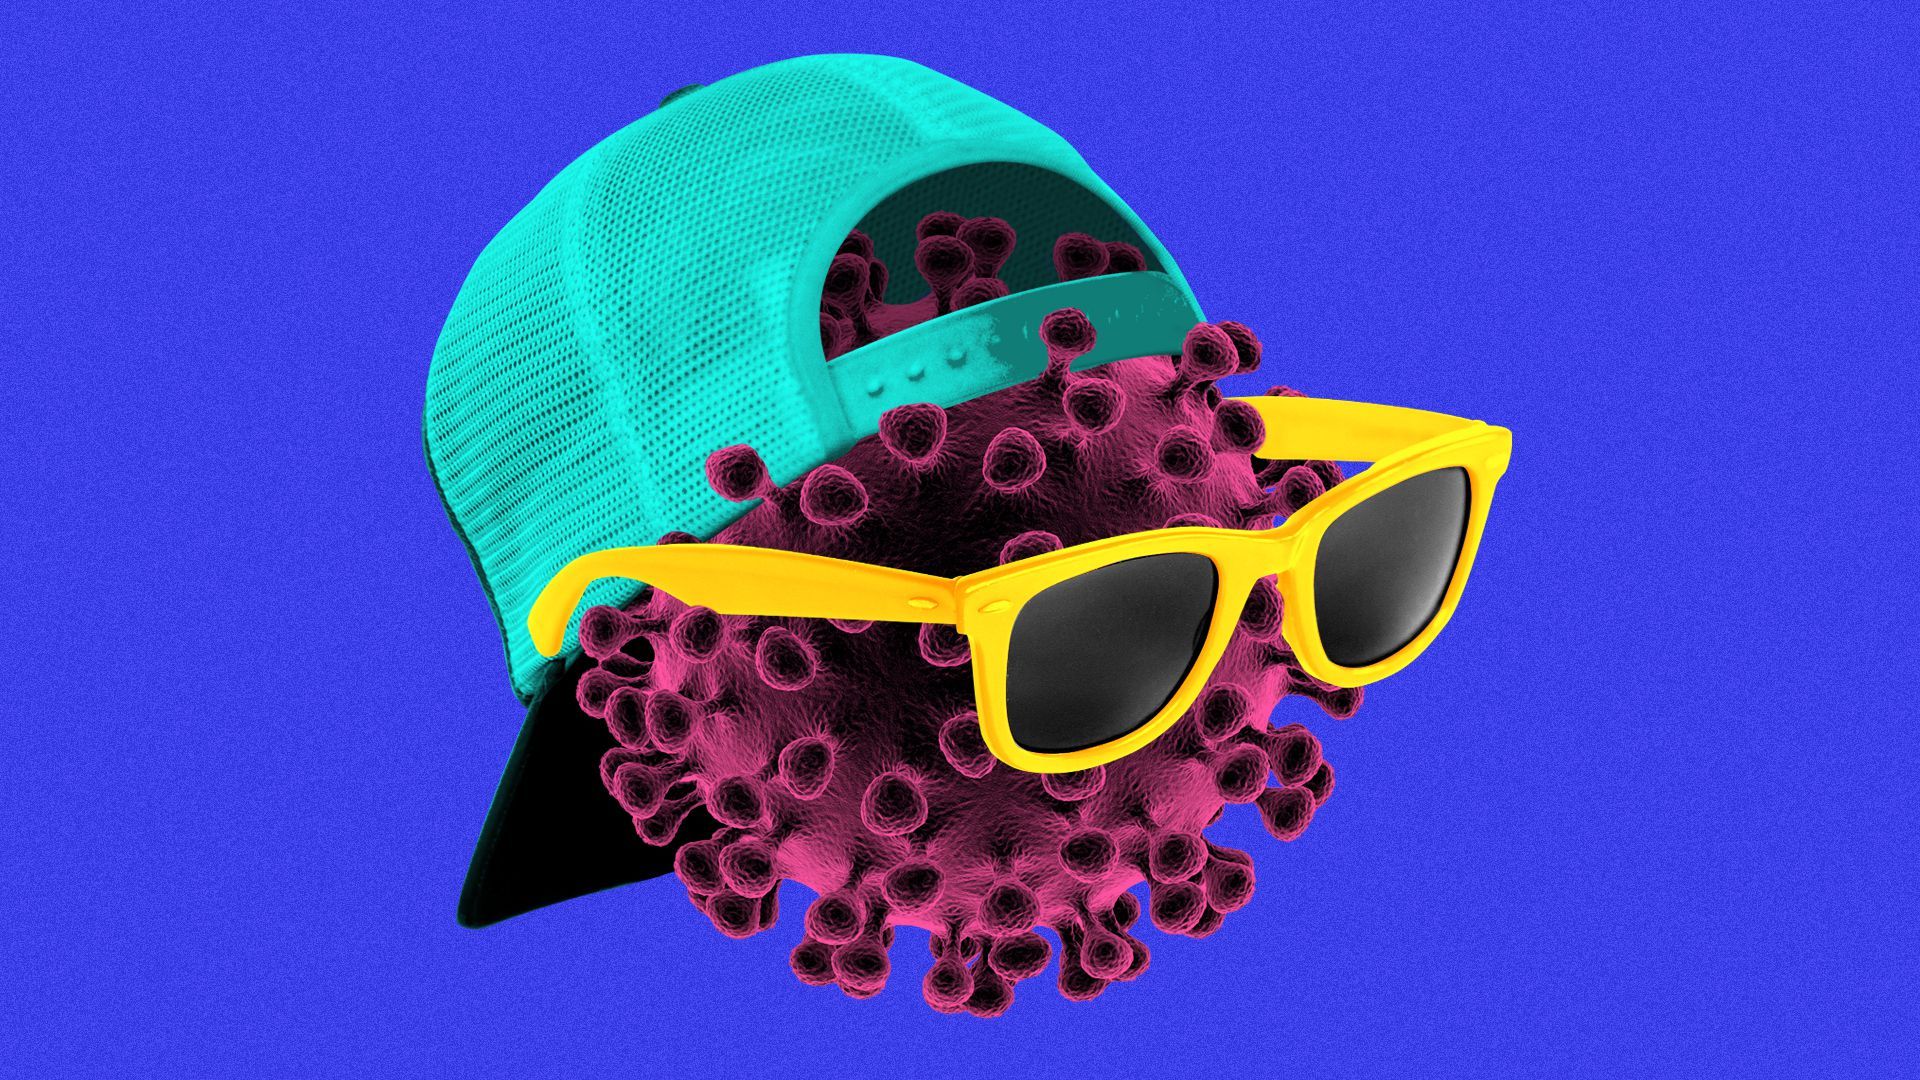 Illustration of a coronavirus particle wearing a backwards baseball hat and sunglasses.